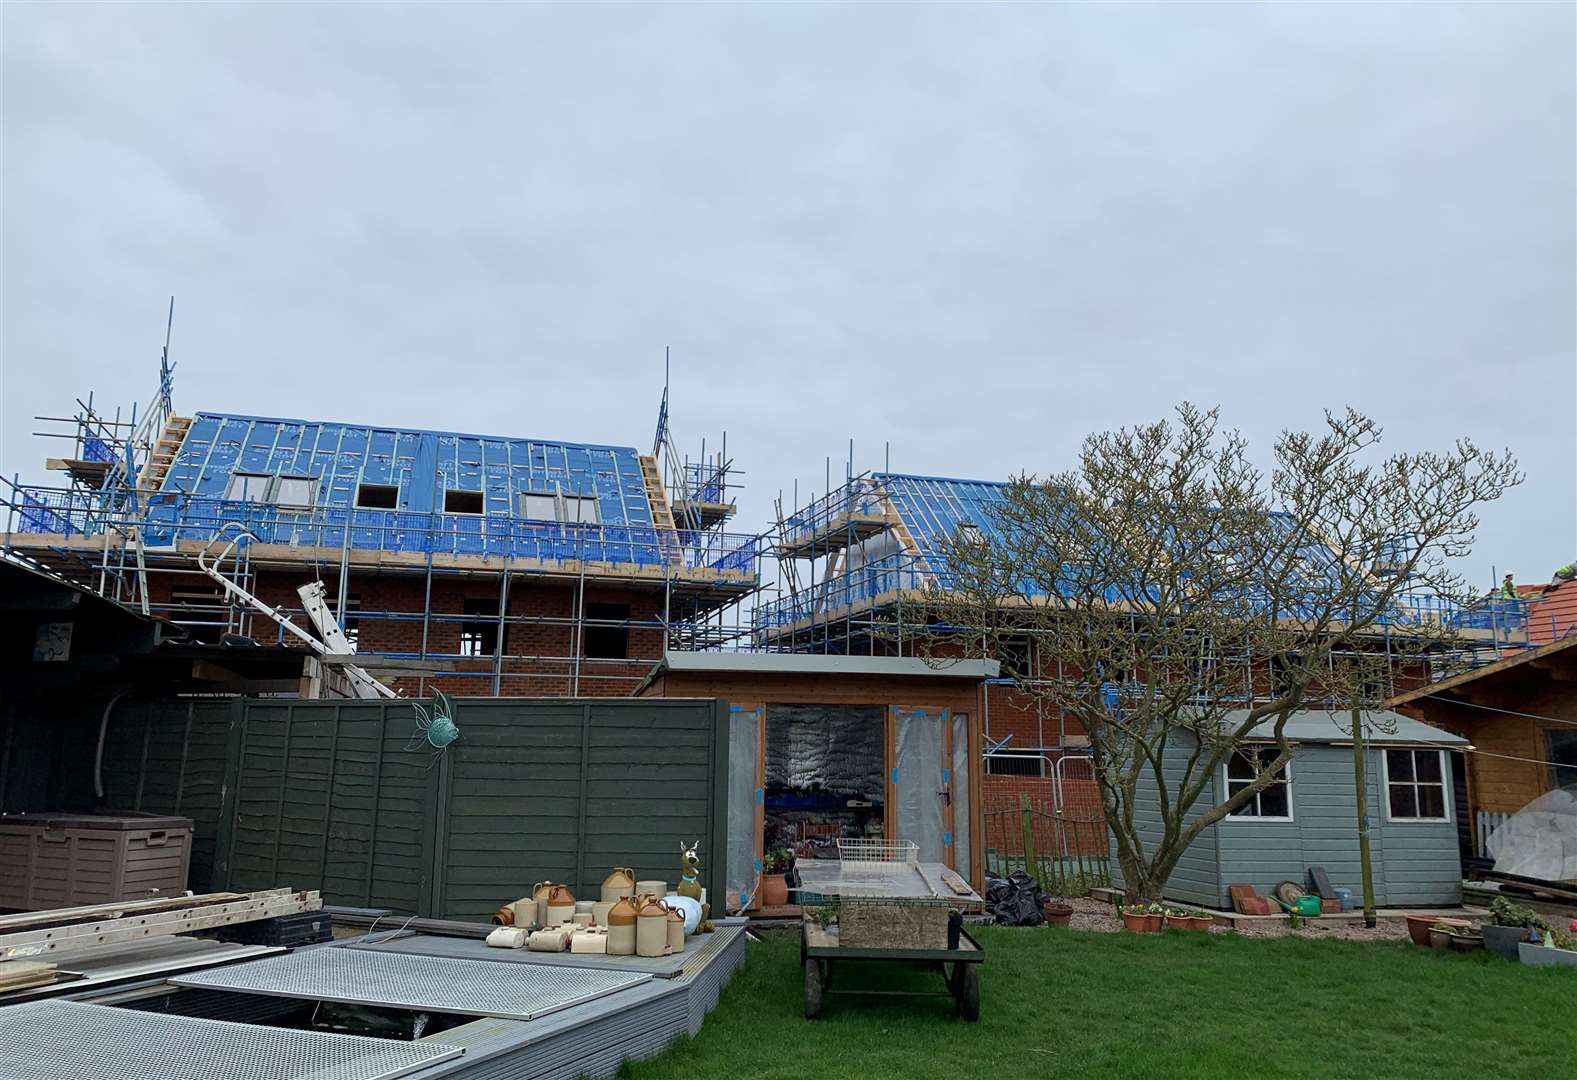 The new Barratt David Wilson Homes properties tower over their garden in Broad Oak, near Canterbury